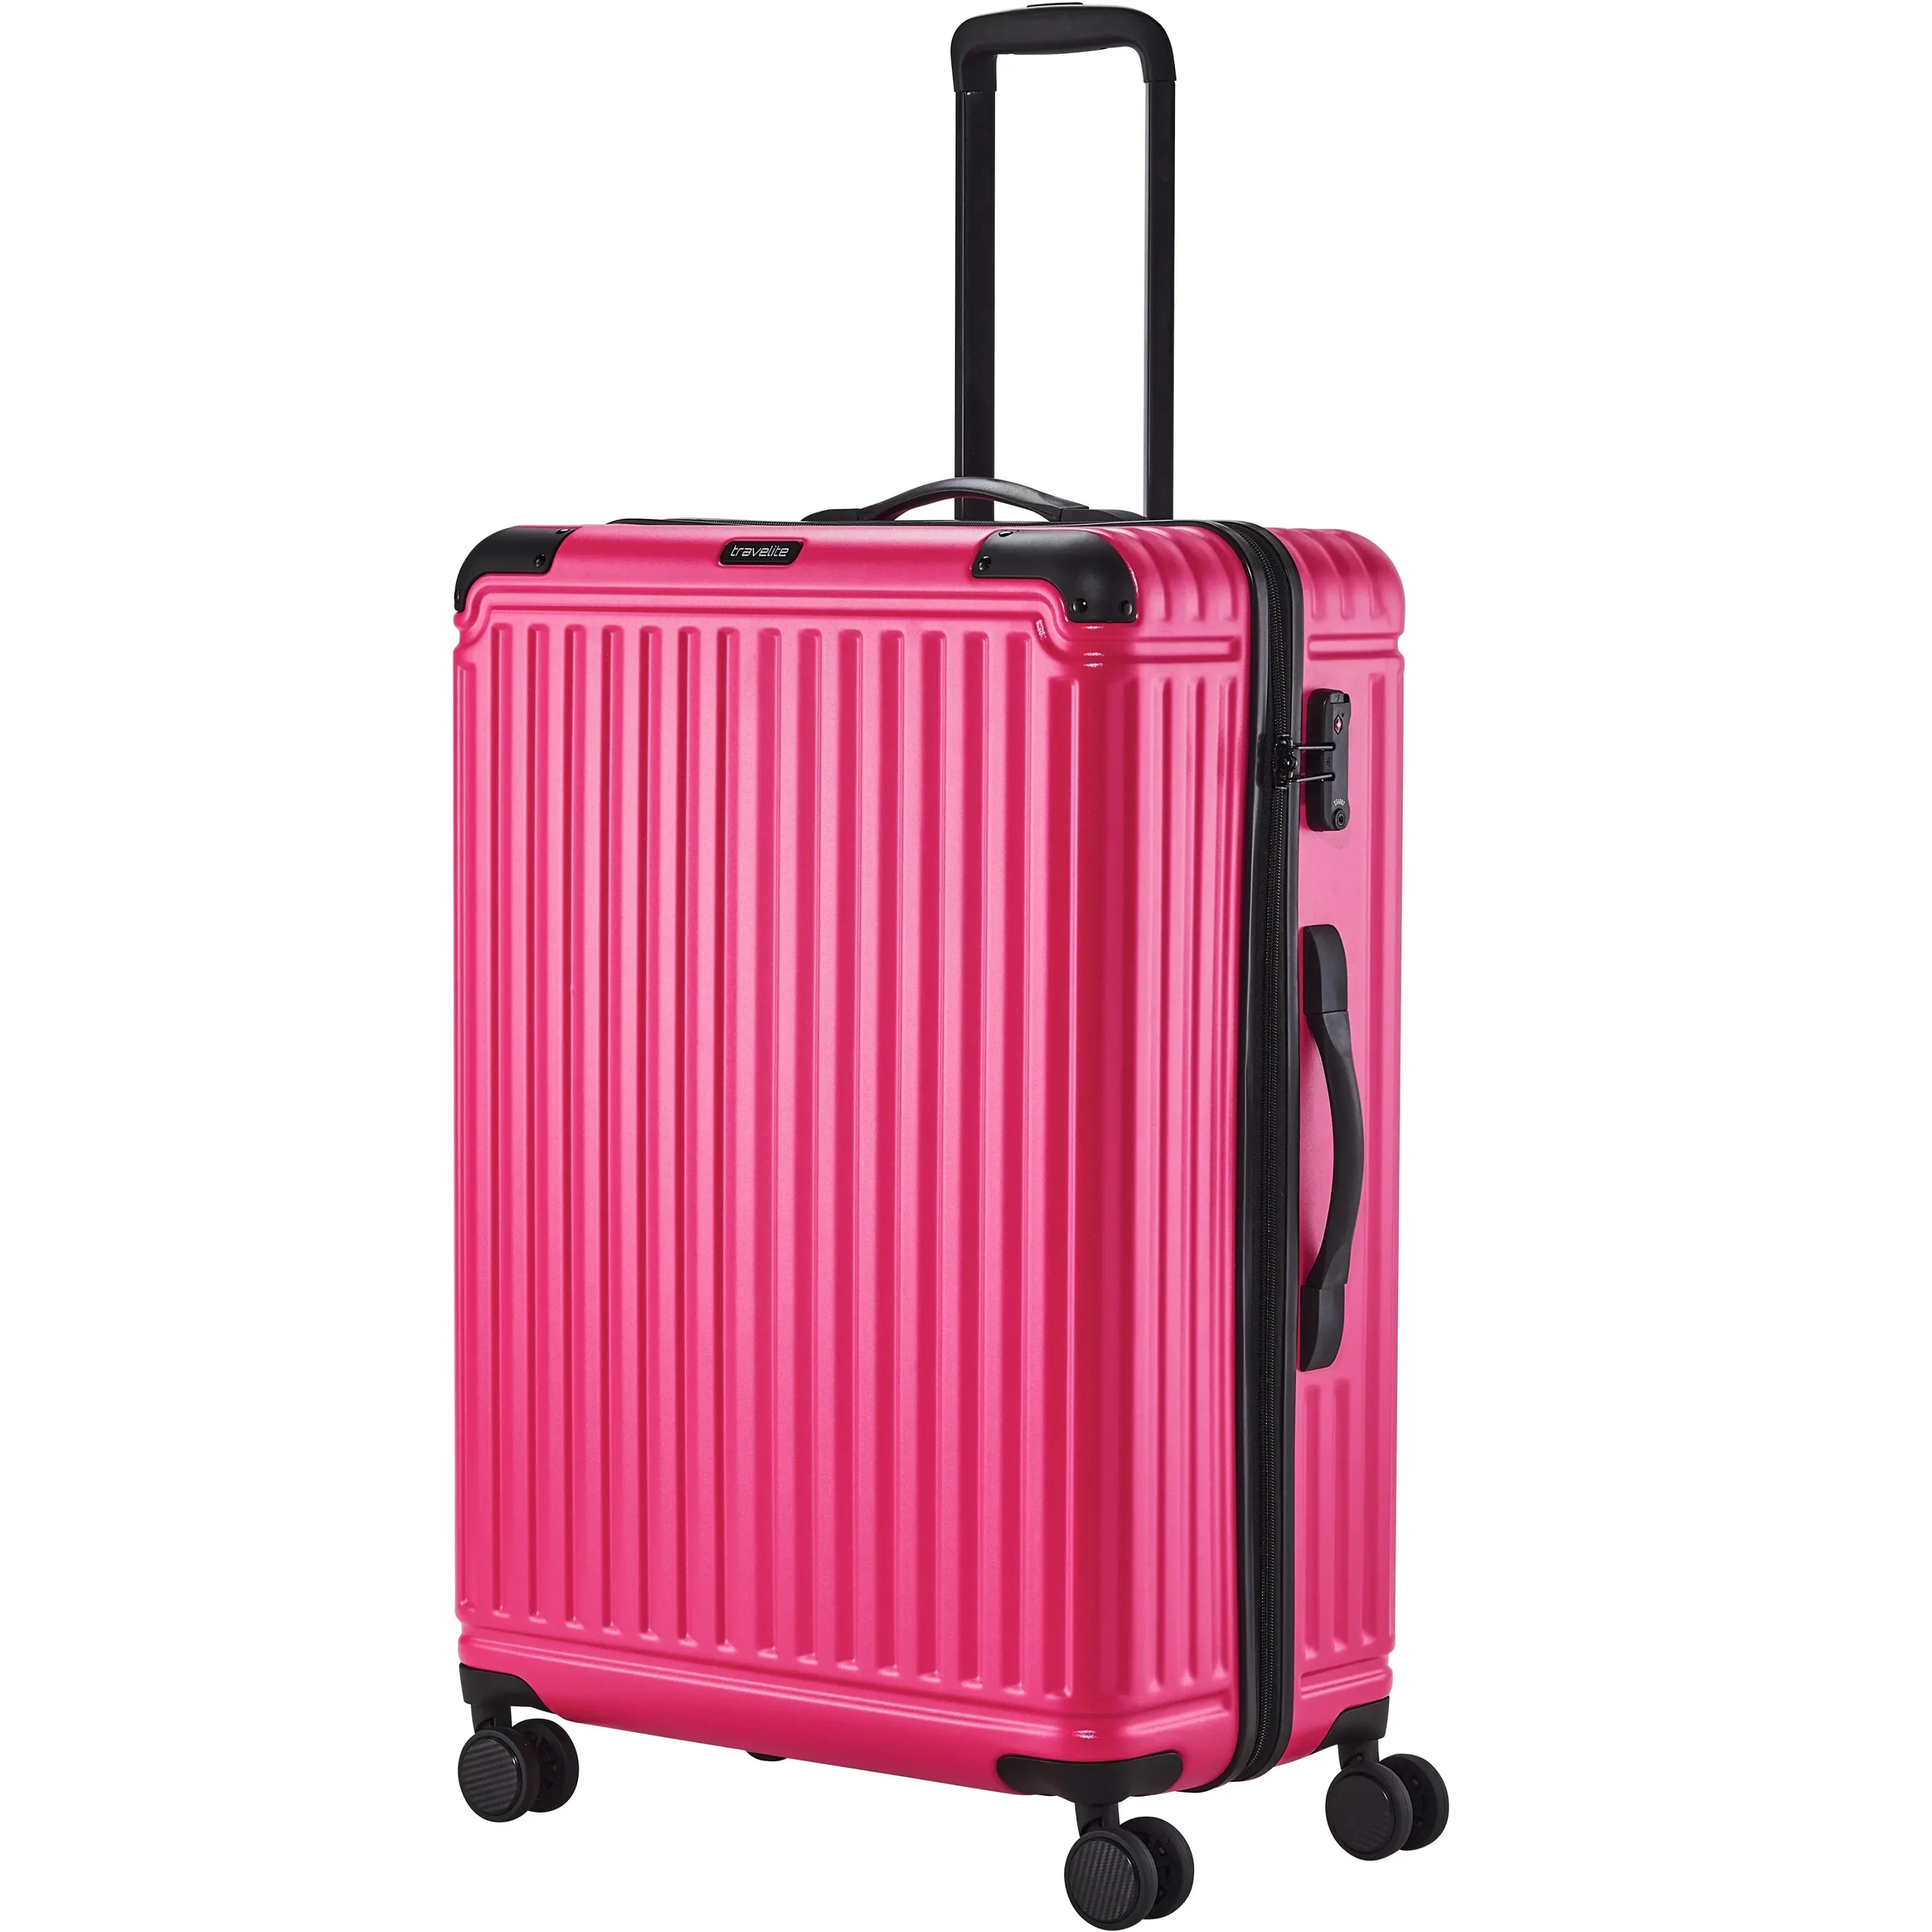 Travelite Cruise 4-wheel trolley 77 cm - Pink